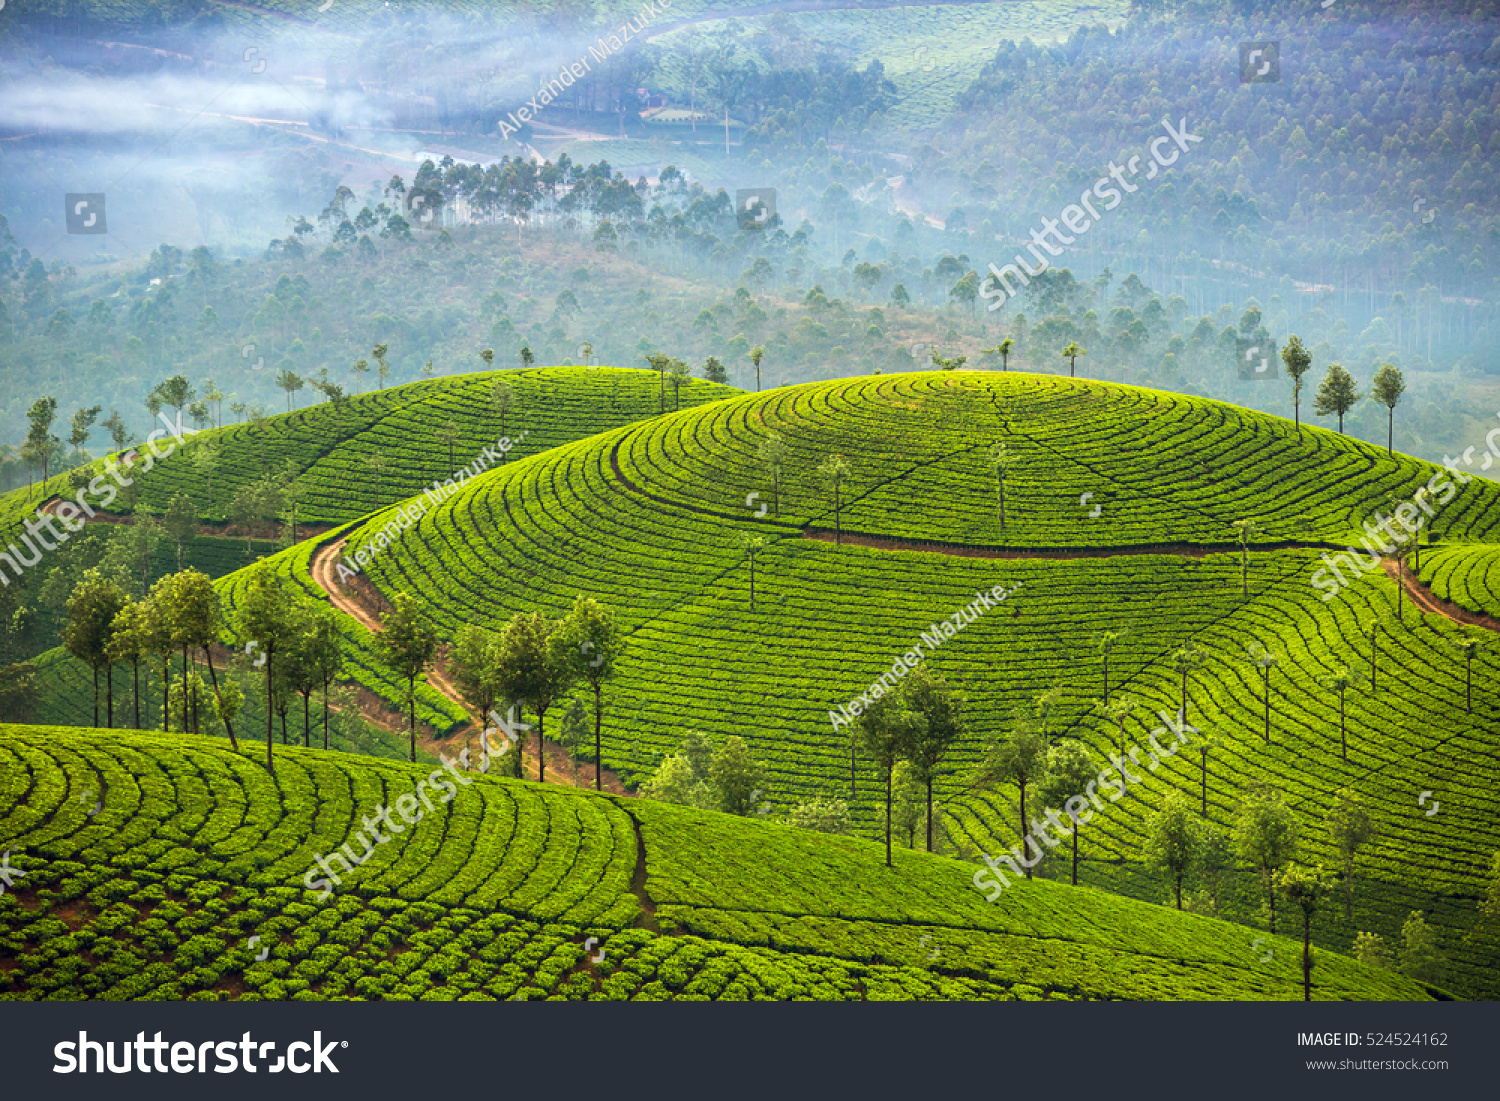 powerpoint-template-india-nature-tea-plantations-mjlmjlinj